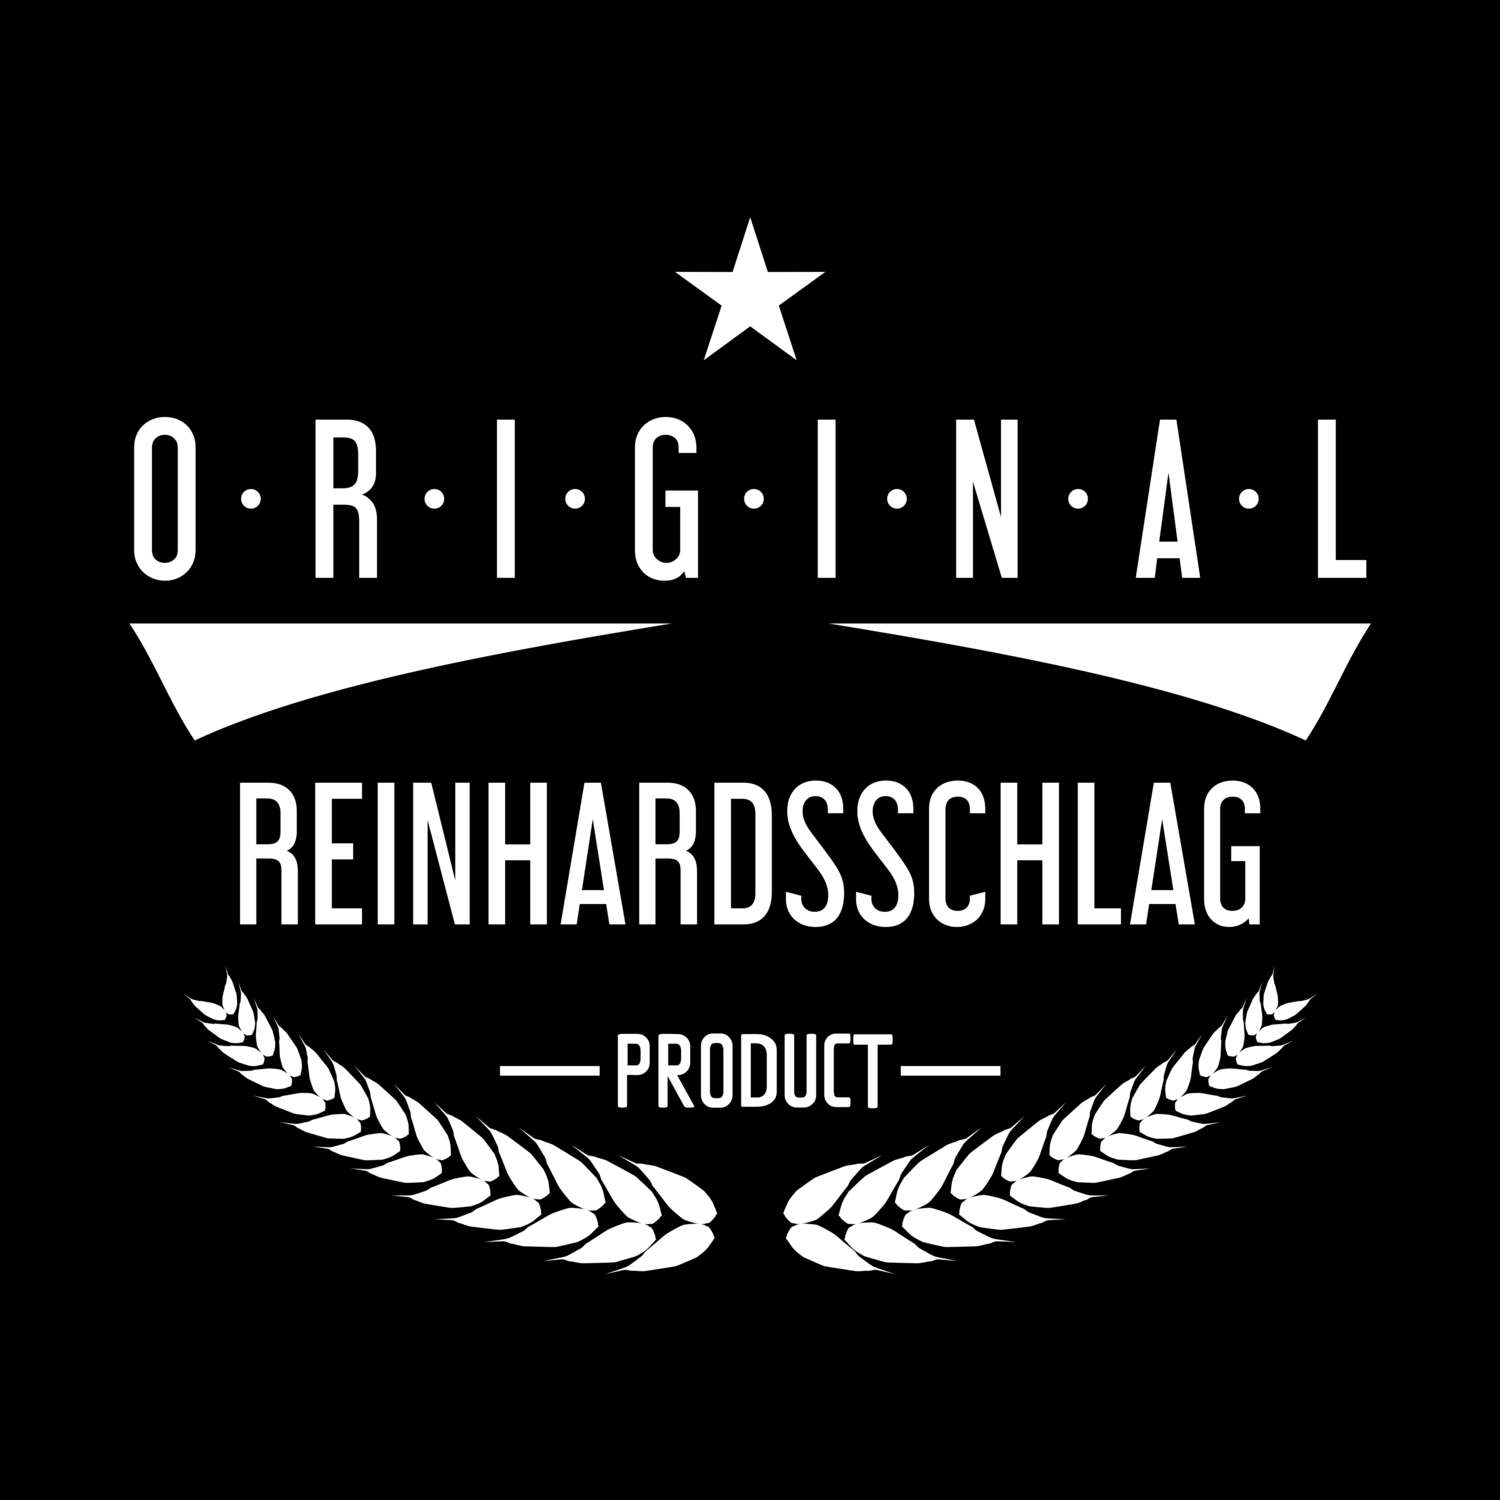 Reinhardsschlag T-Shirt »Original Product«